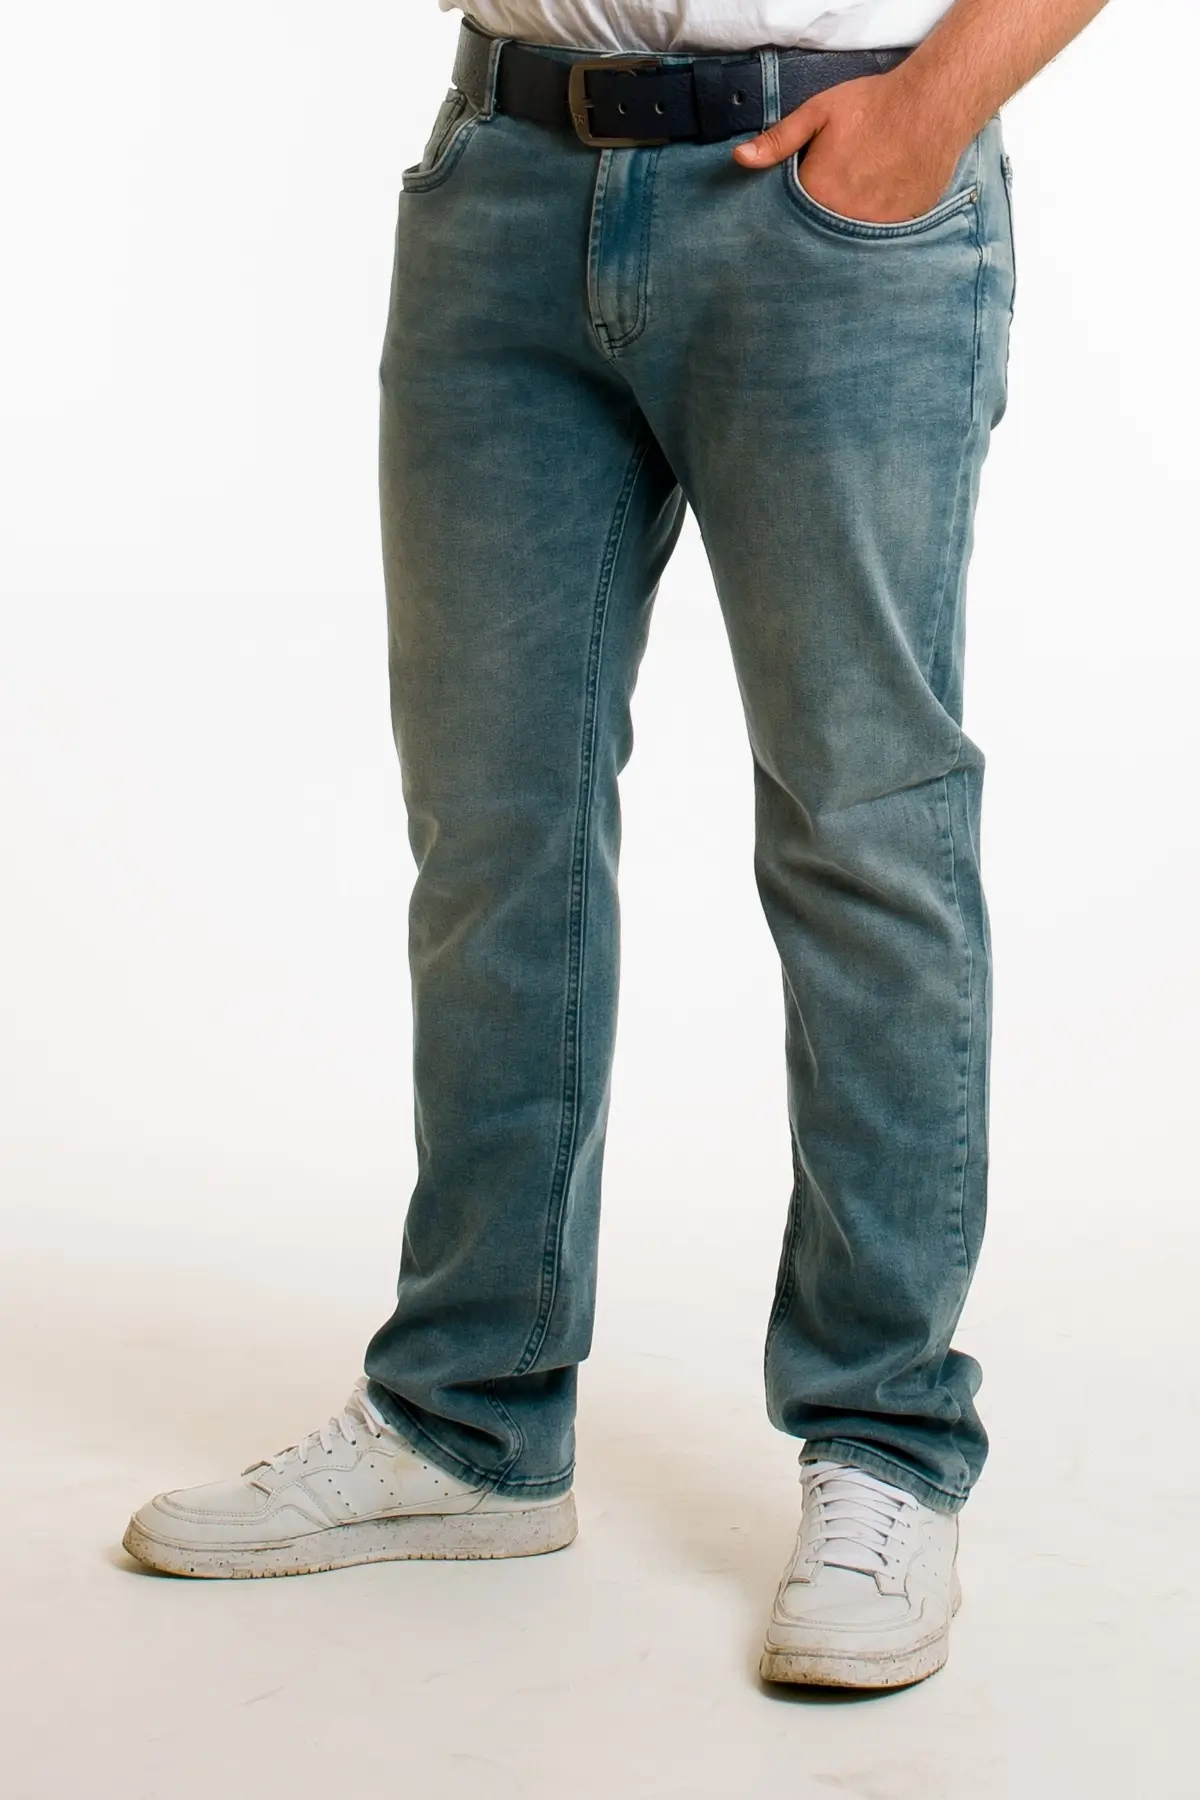 Desperado 962 Düz Model Kemerli Erkek Kot Pantolon - Thumbnail